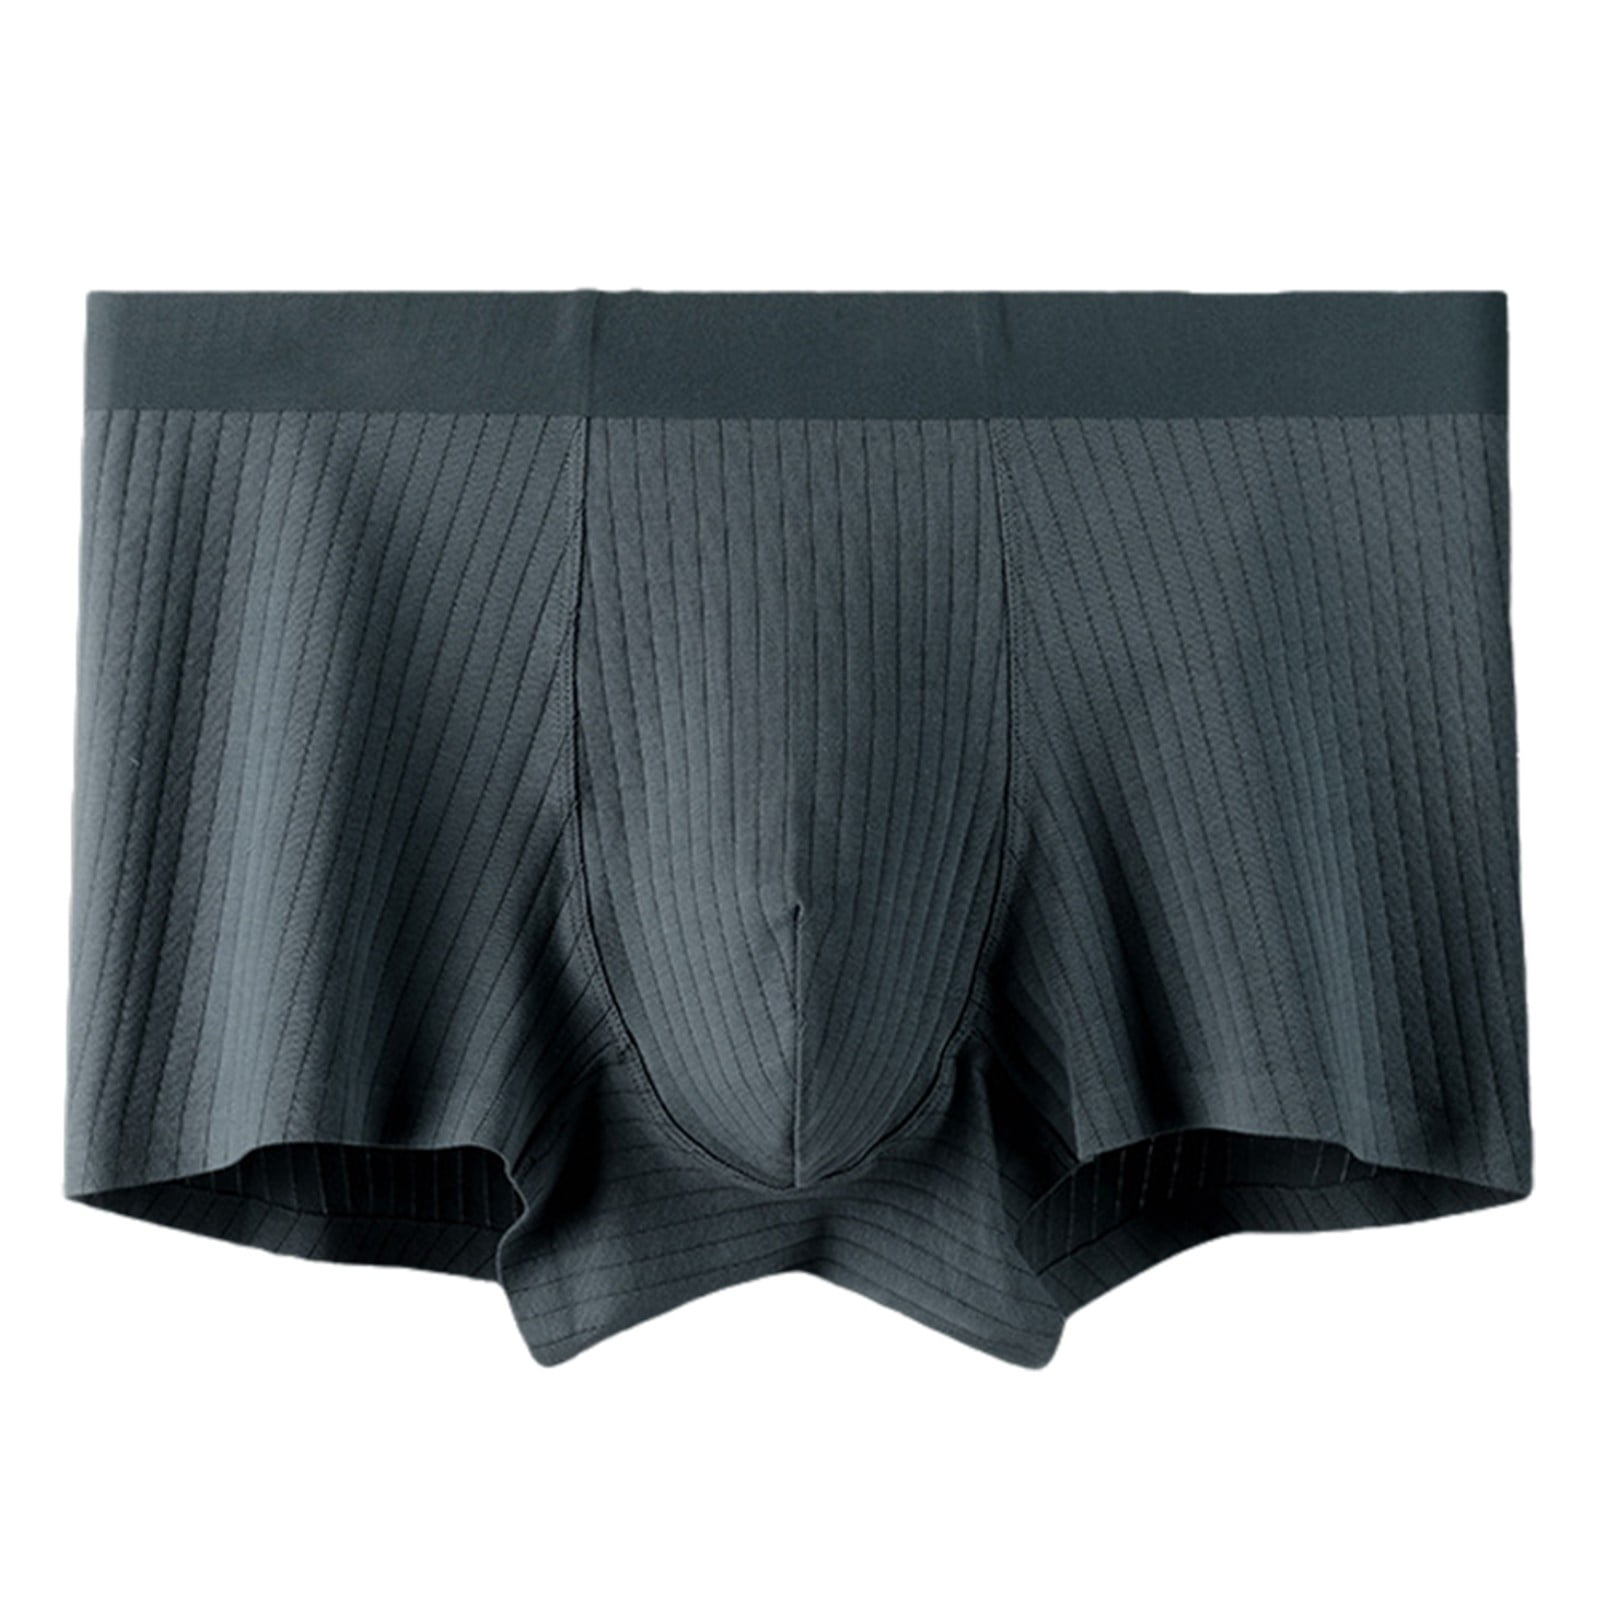 WEAIXIMIUNG Male Men's Underwear Thermal Pants Mens Underwear Pad ...